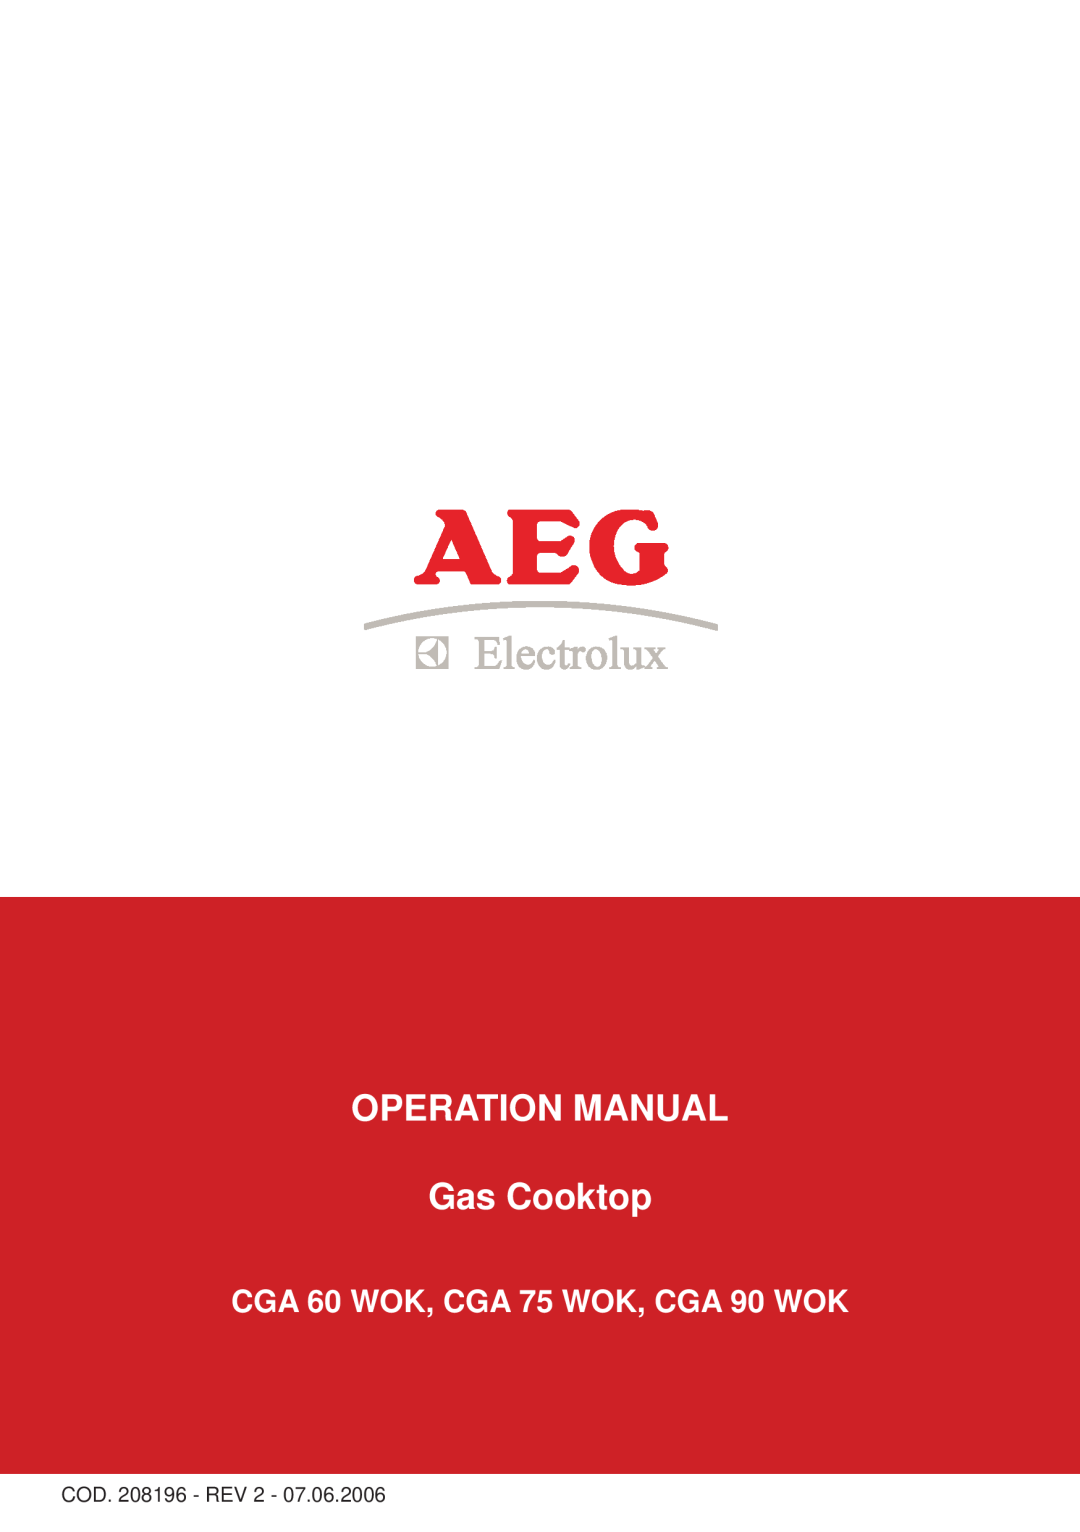 AEG operation manual CGA 60 WOK, CGA 75 WOK, CGA 90 WOK 